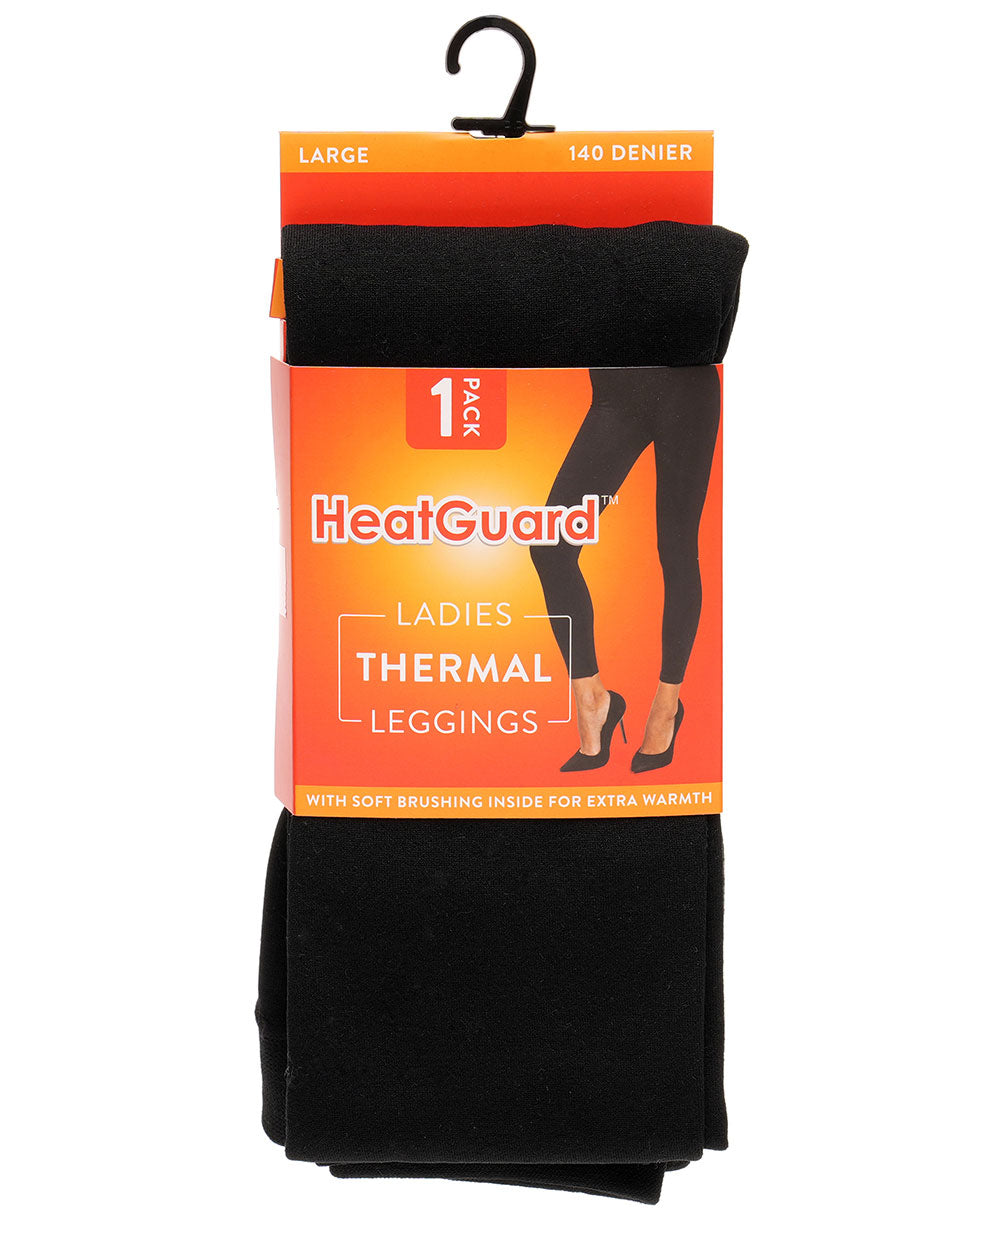 thermal leggings black ladies warm leggings seamless essential small medium large 140 denier